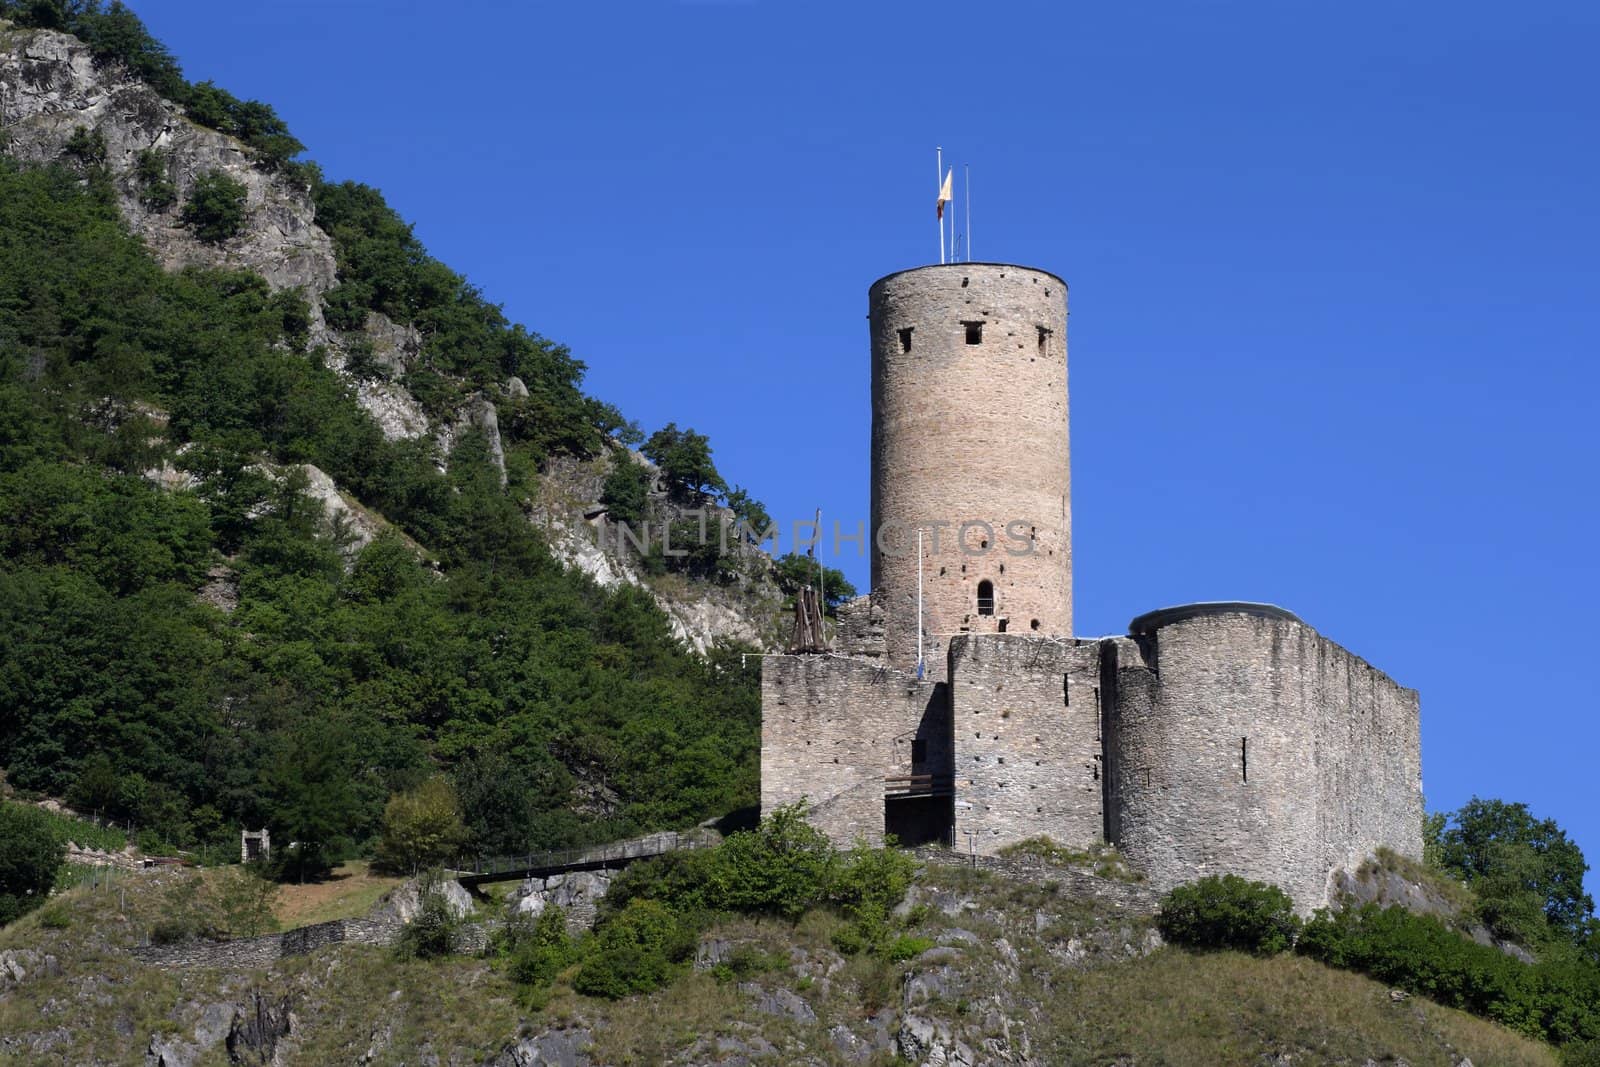 Photo of Chateau de la Batiaz in Martigny Switzerland.